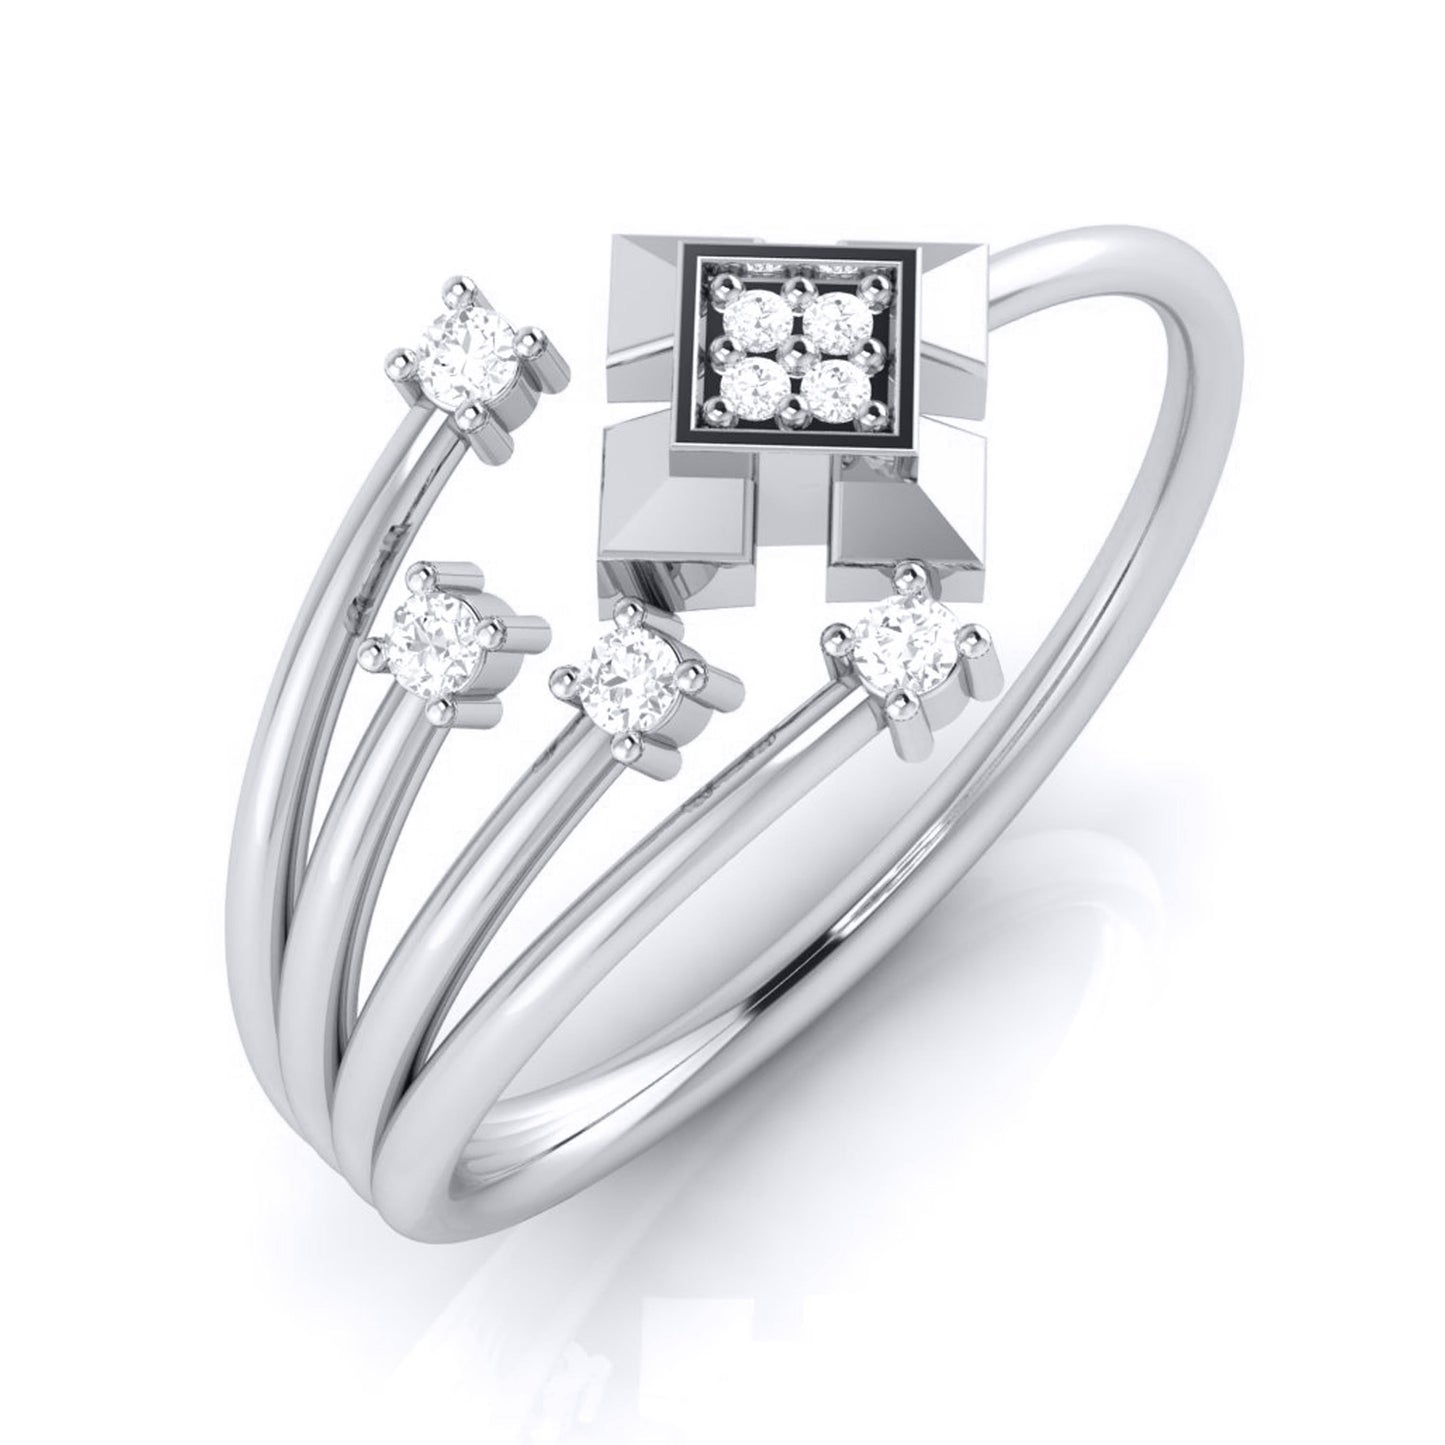 Flower Design Wedding Set With Princess Cut Diamond : Arden Jewelers